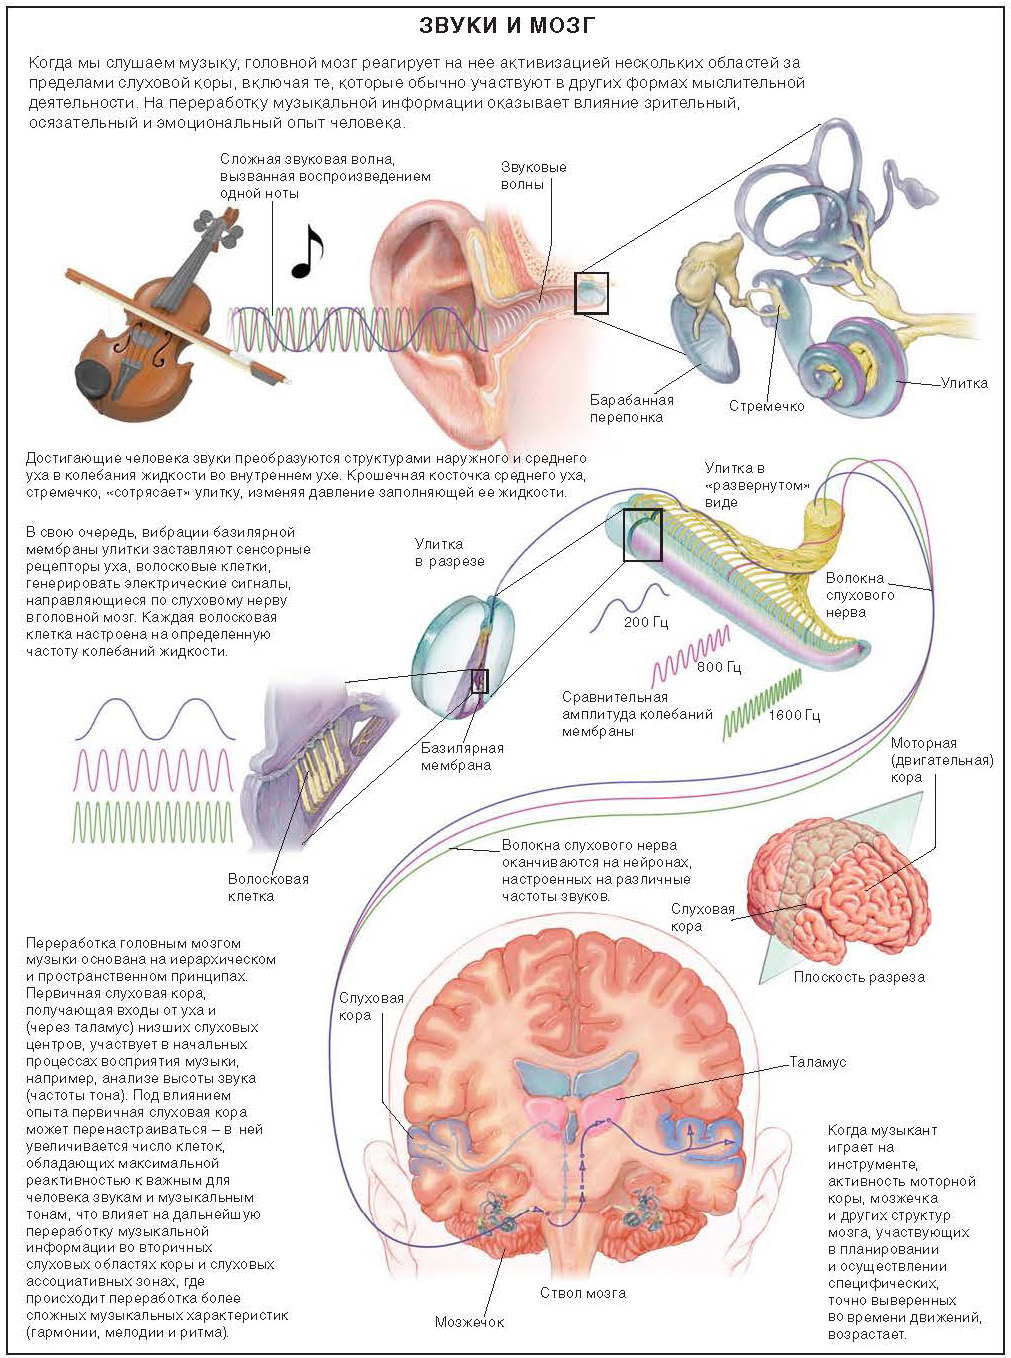 Brain sound. Влияние музыки на мозг человека. Влияние звука на мозг человека. Схема воздействия музыки на человека. Влияние музыки на человека схема.